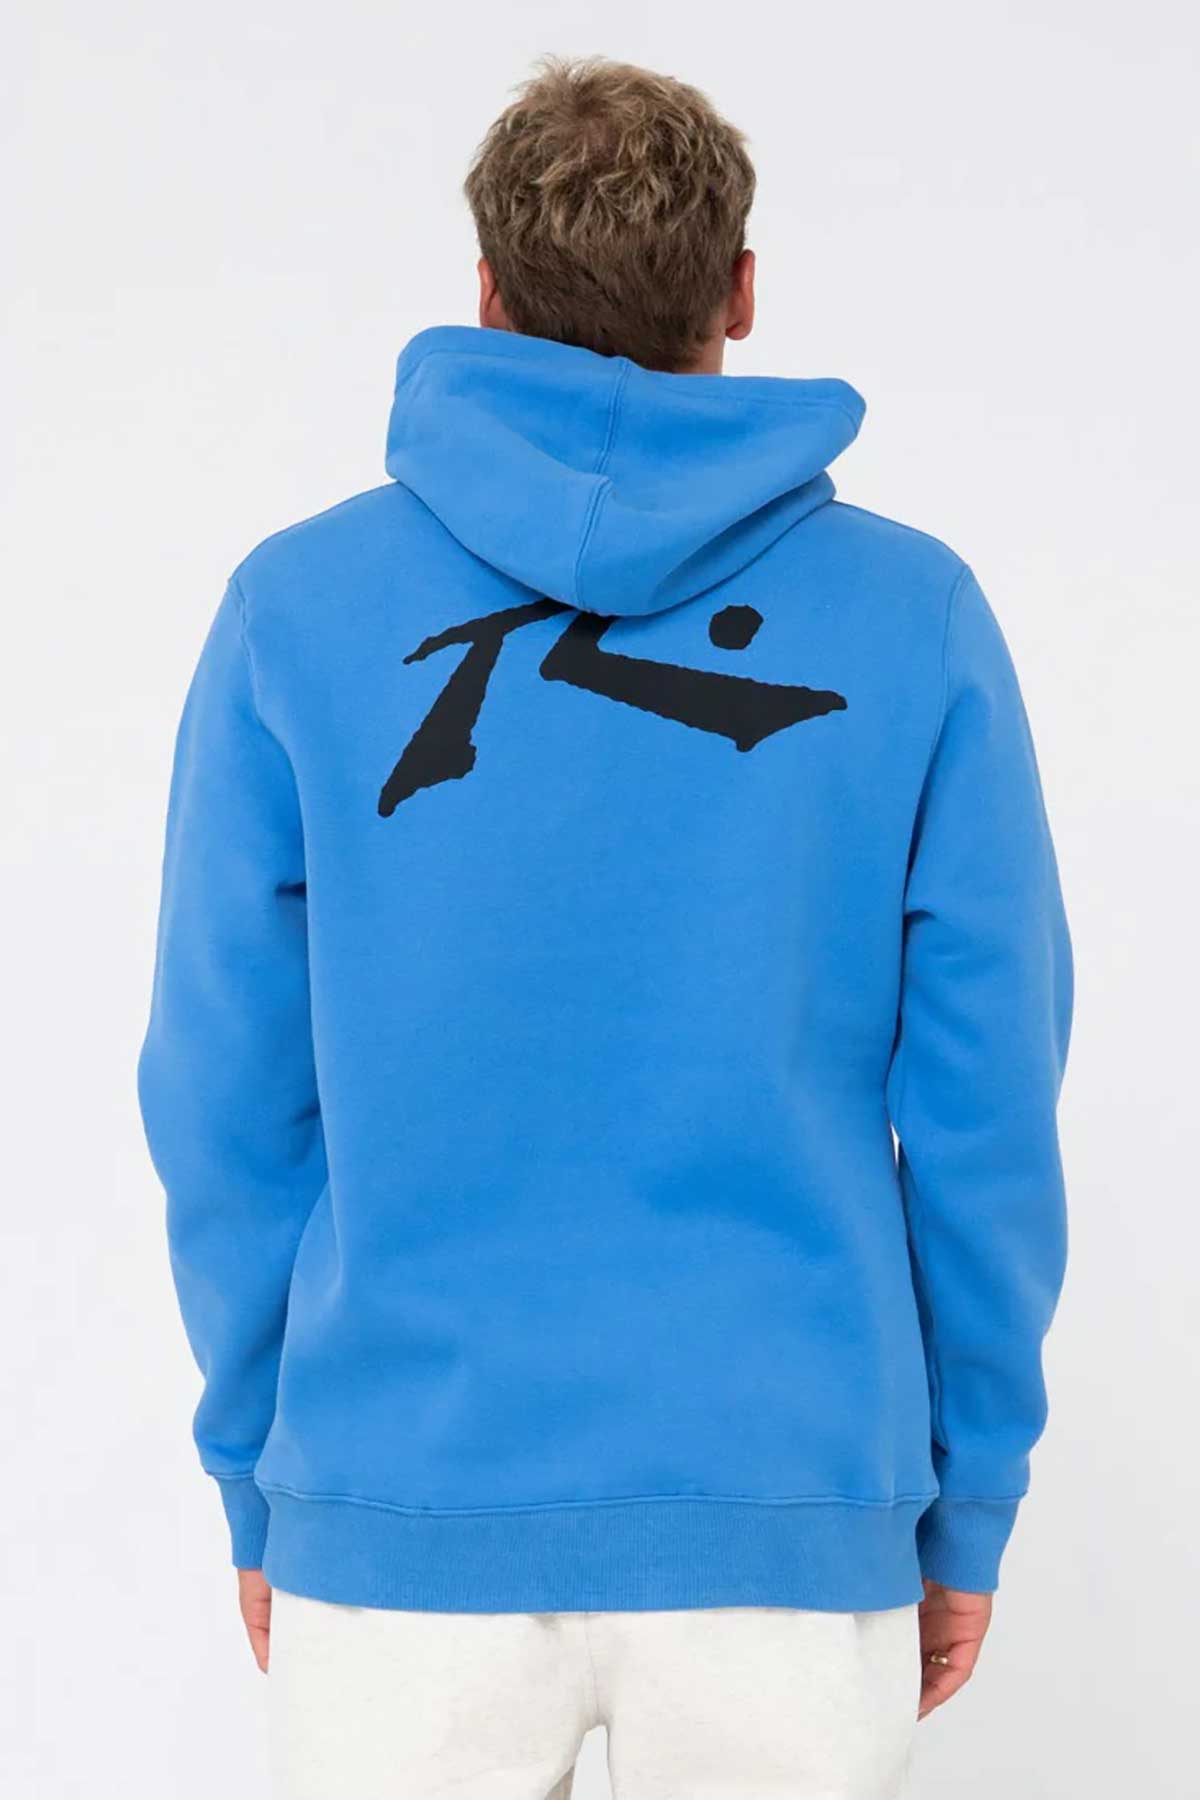 Rusty Hood Fleece Jumper - Competition, blue colourway.